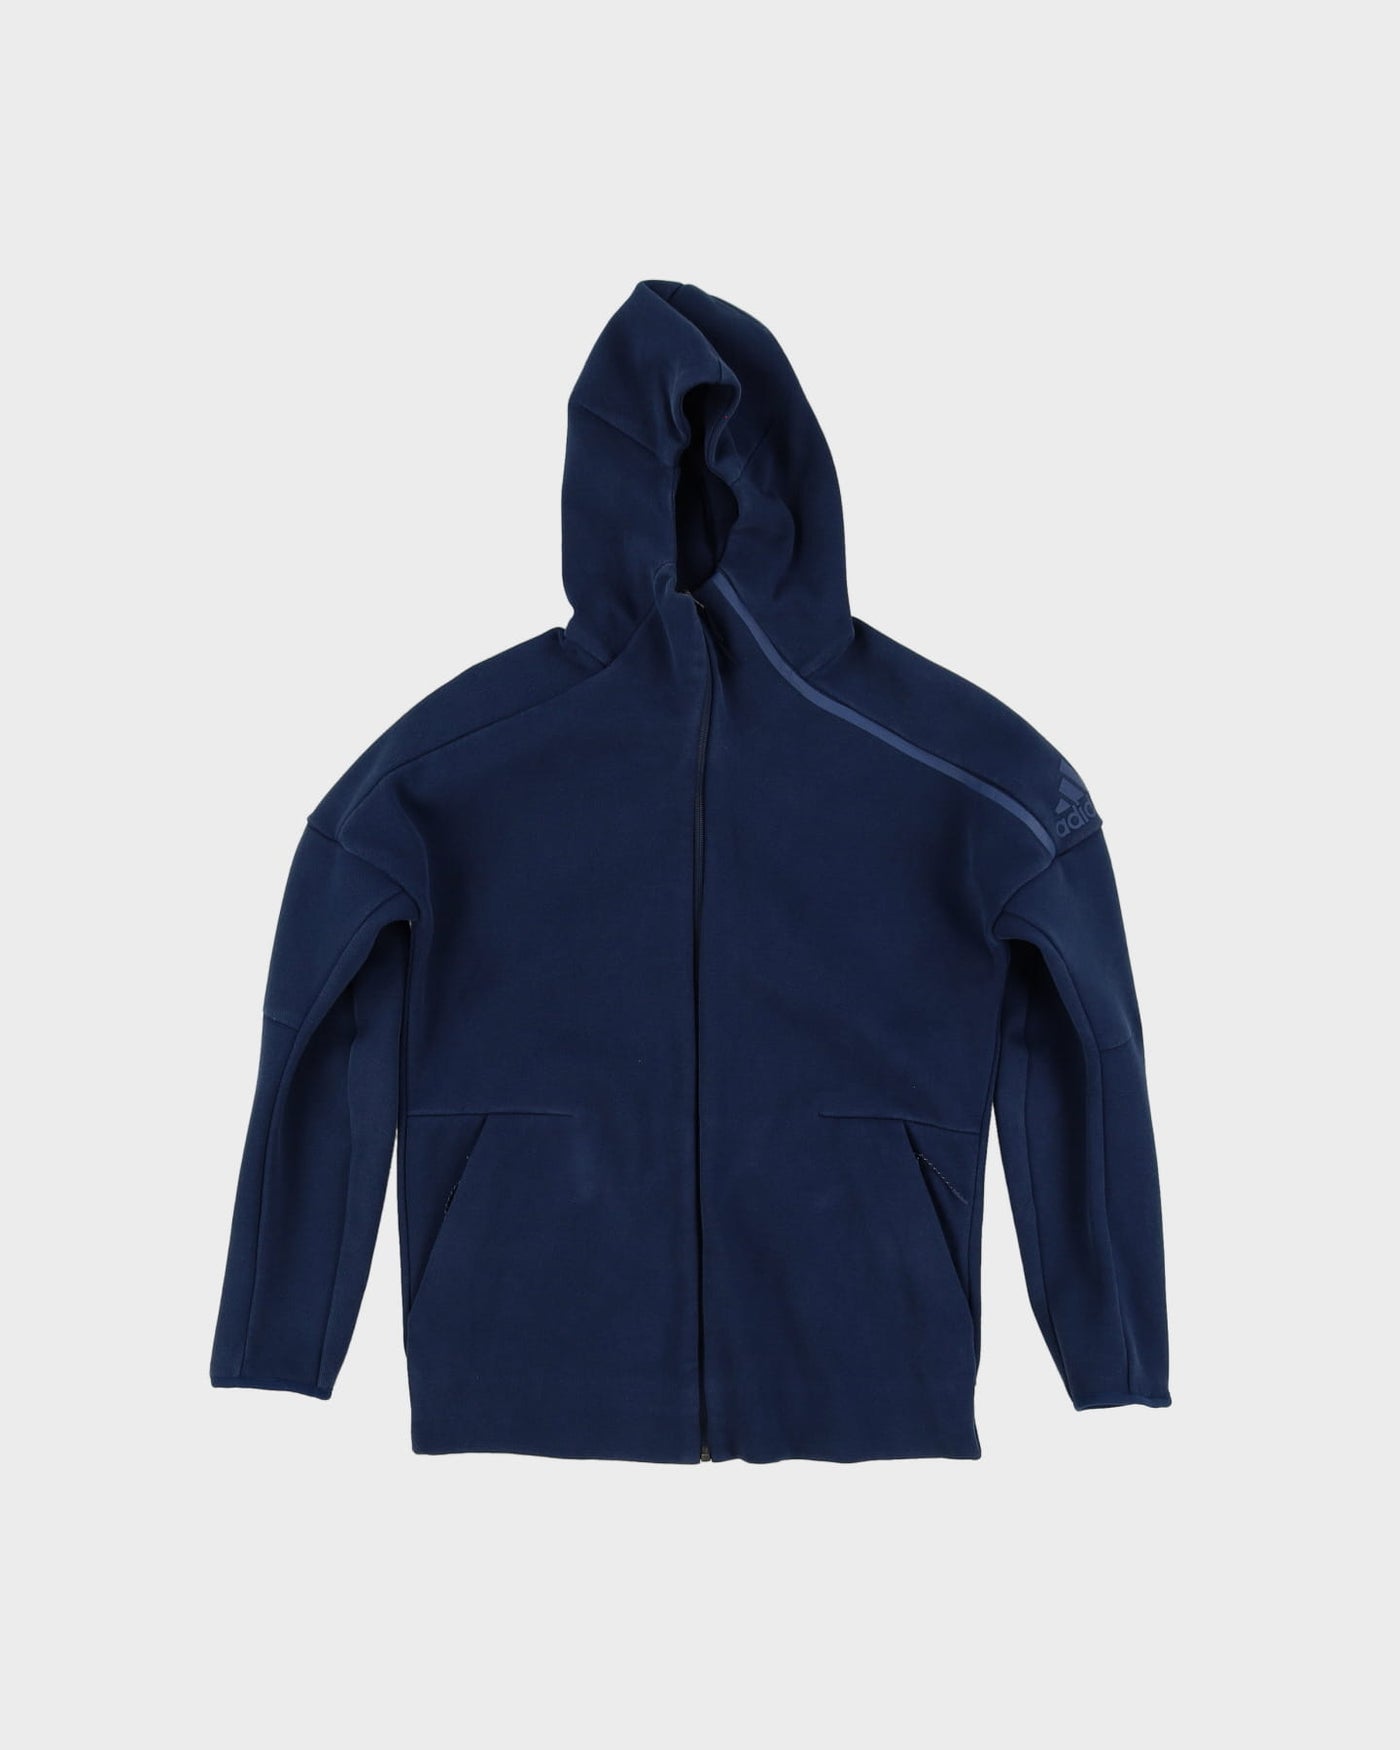 Adidas Blue / Navy Hooded Zip-Up Sweatshirt - L